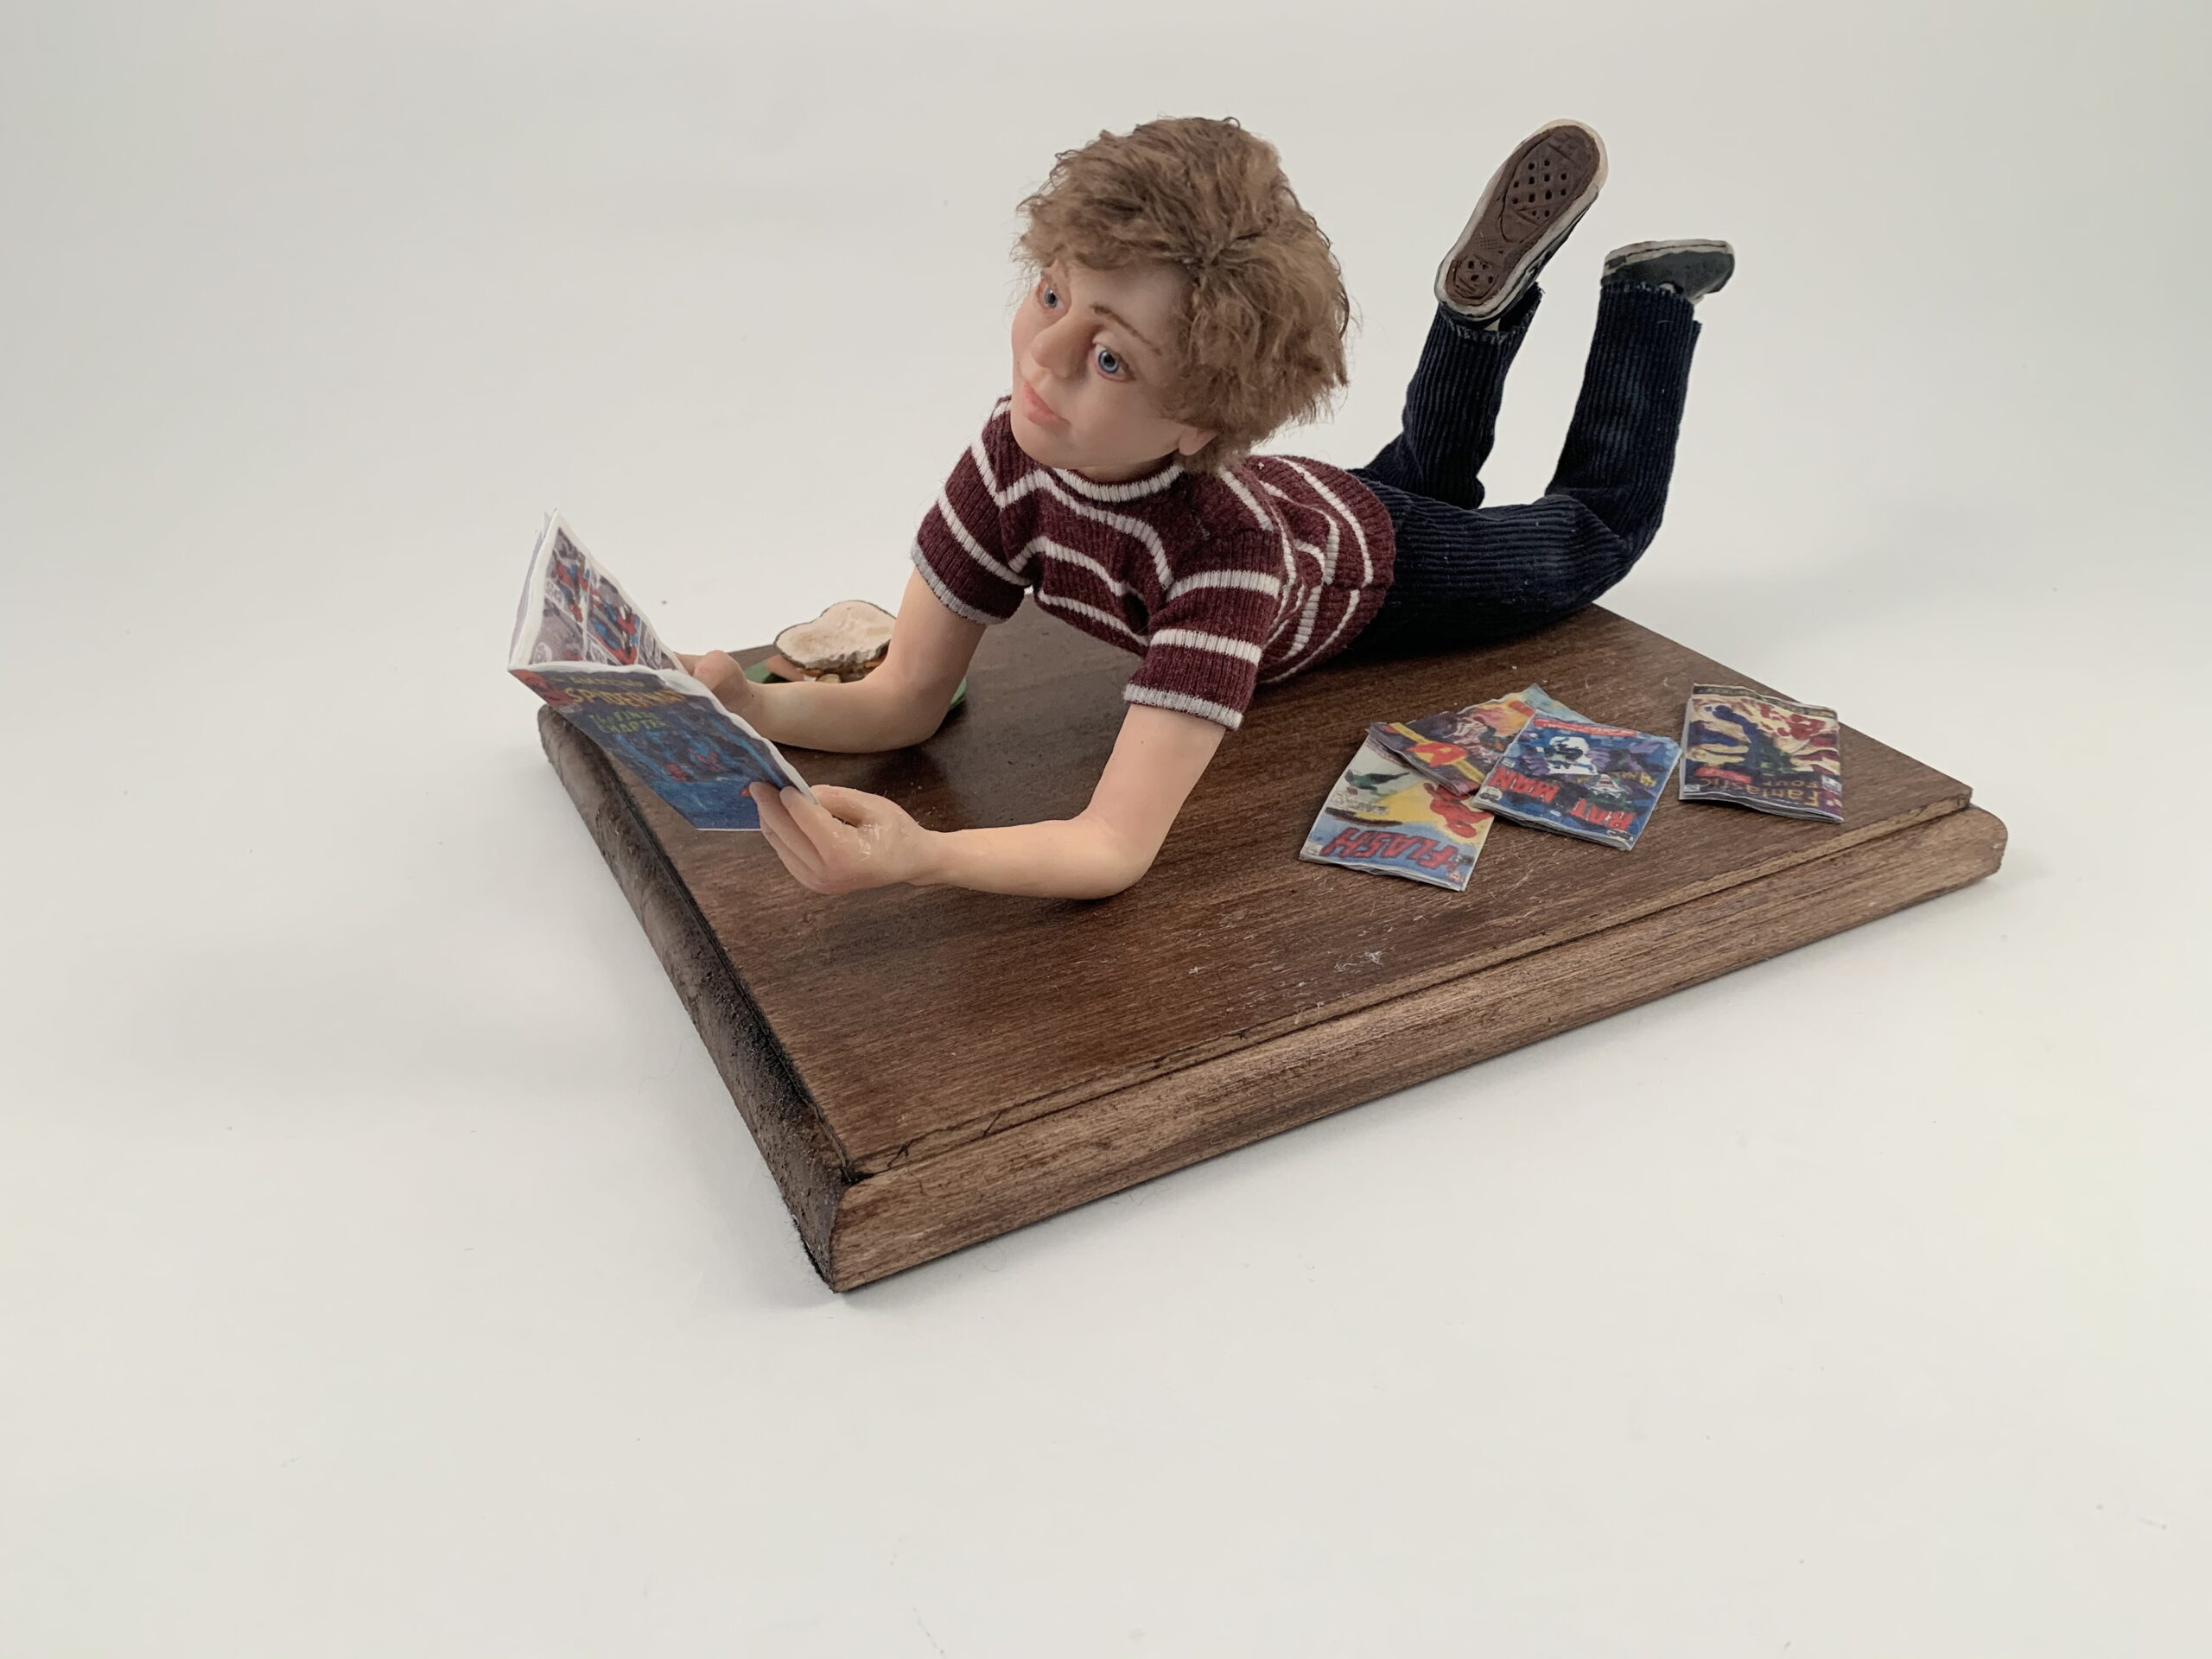 A handmade doll of a boy reading comic books.